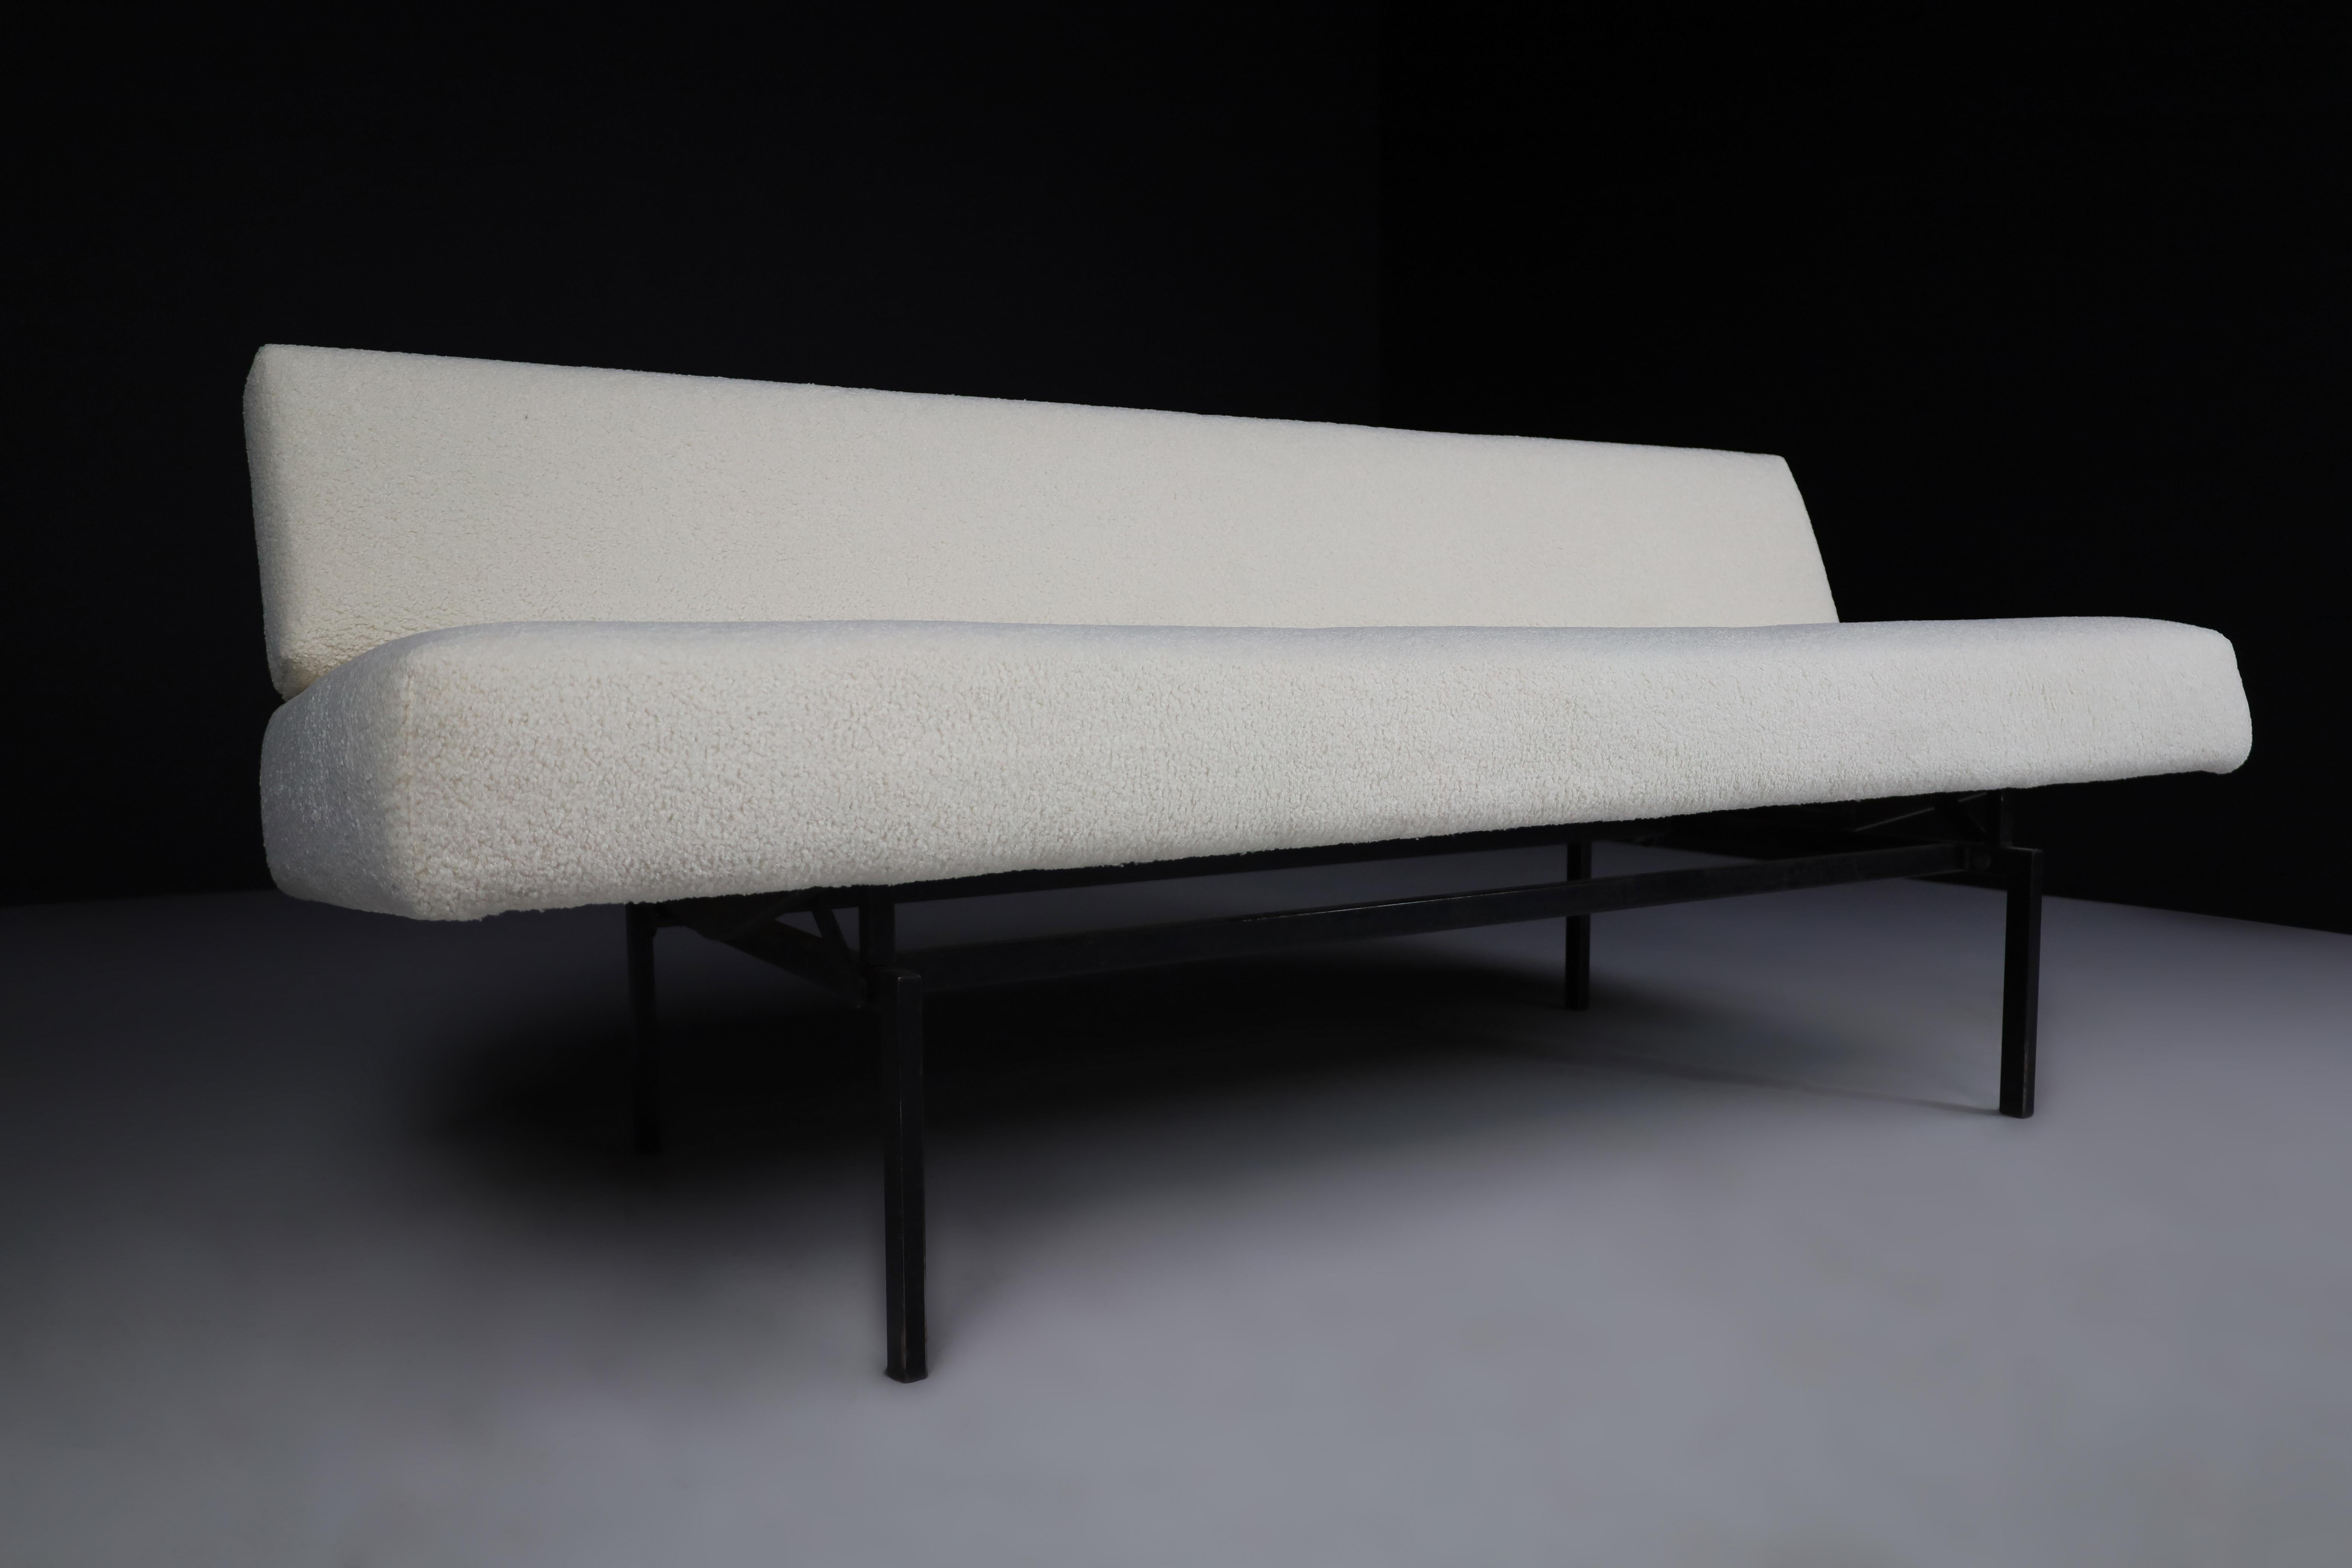 Metal Martin Visser Sofa or Sleeper Sofa for 't Spectrum in New Teddy Fabric, 1960s